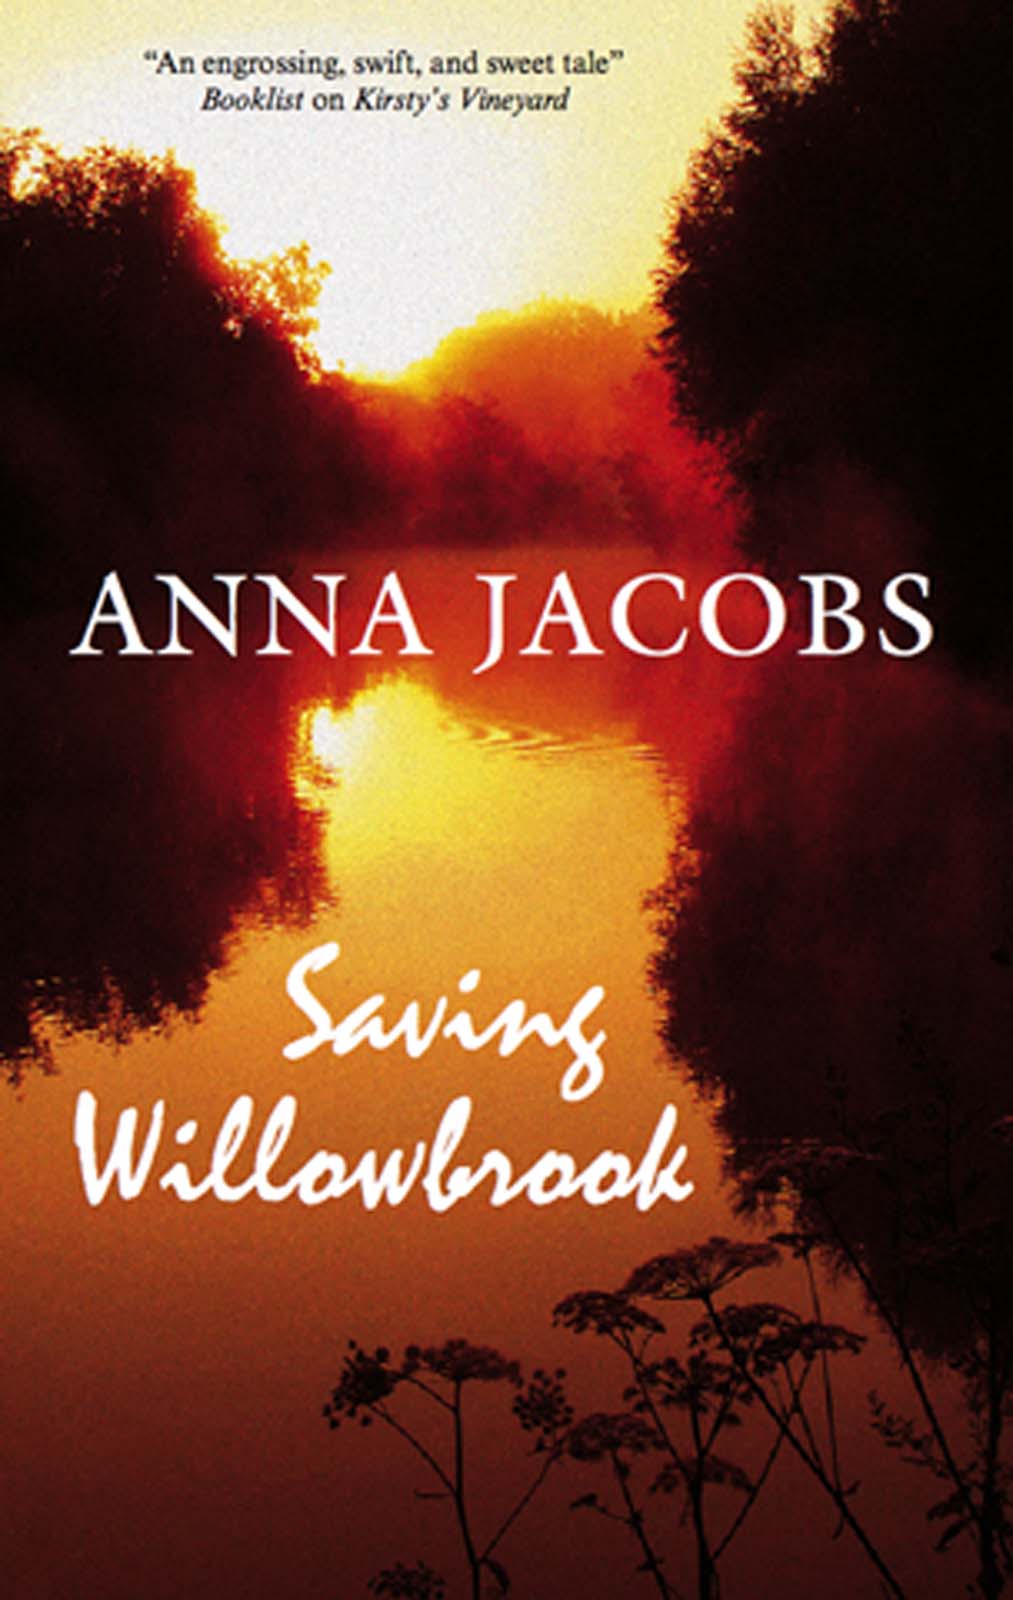 Saving Willowbrook (2009) by Anna Jacobs